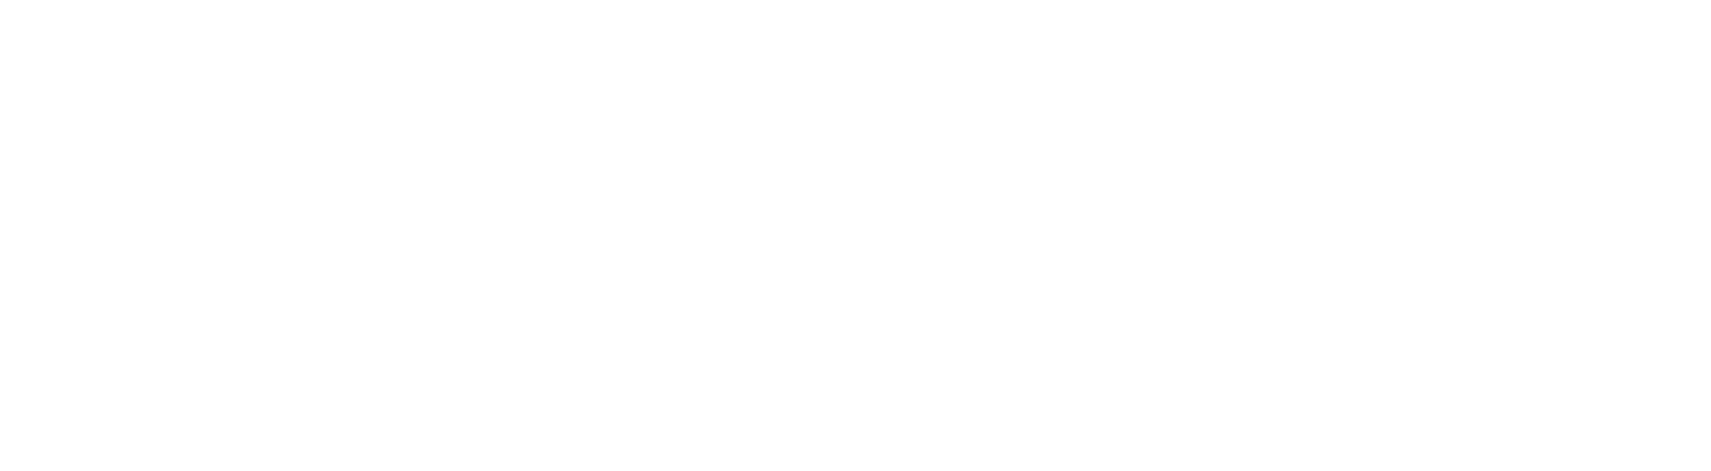 national debt relief footer logo